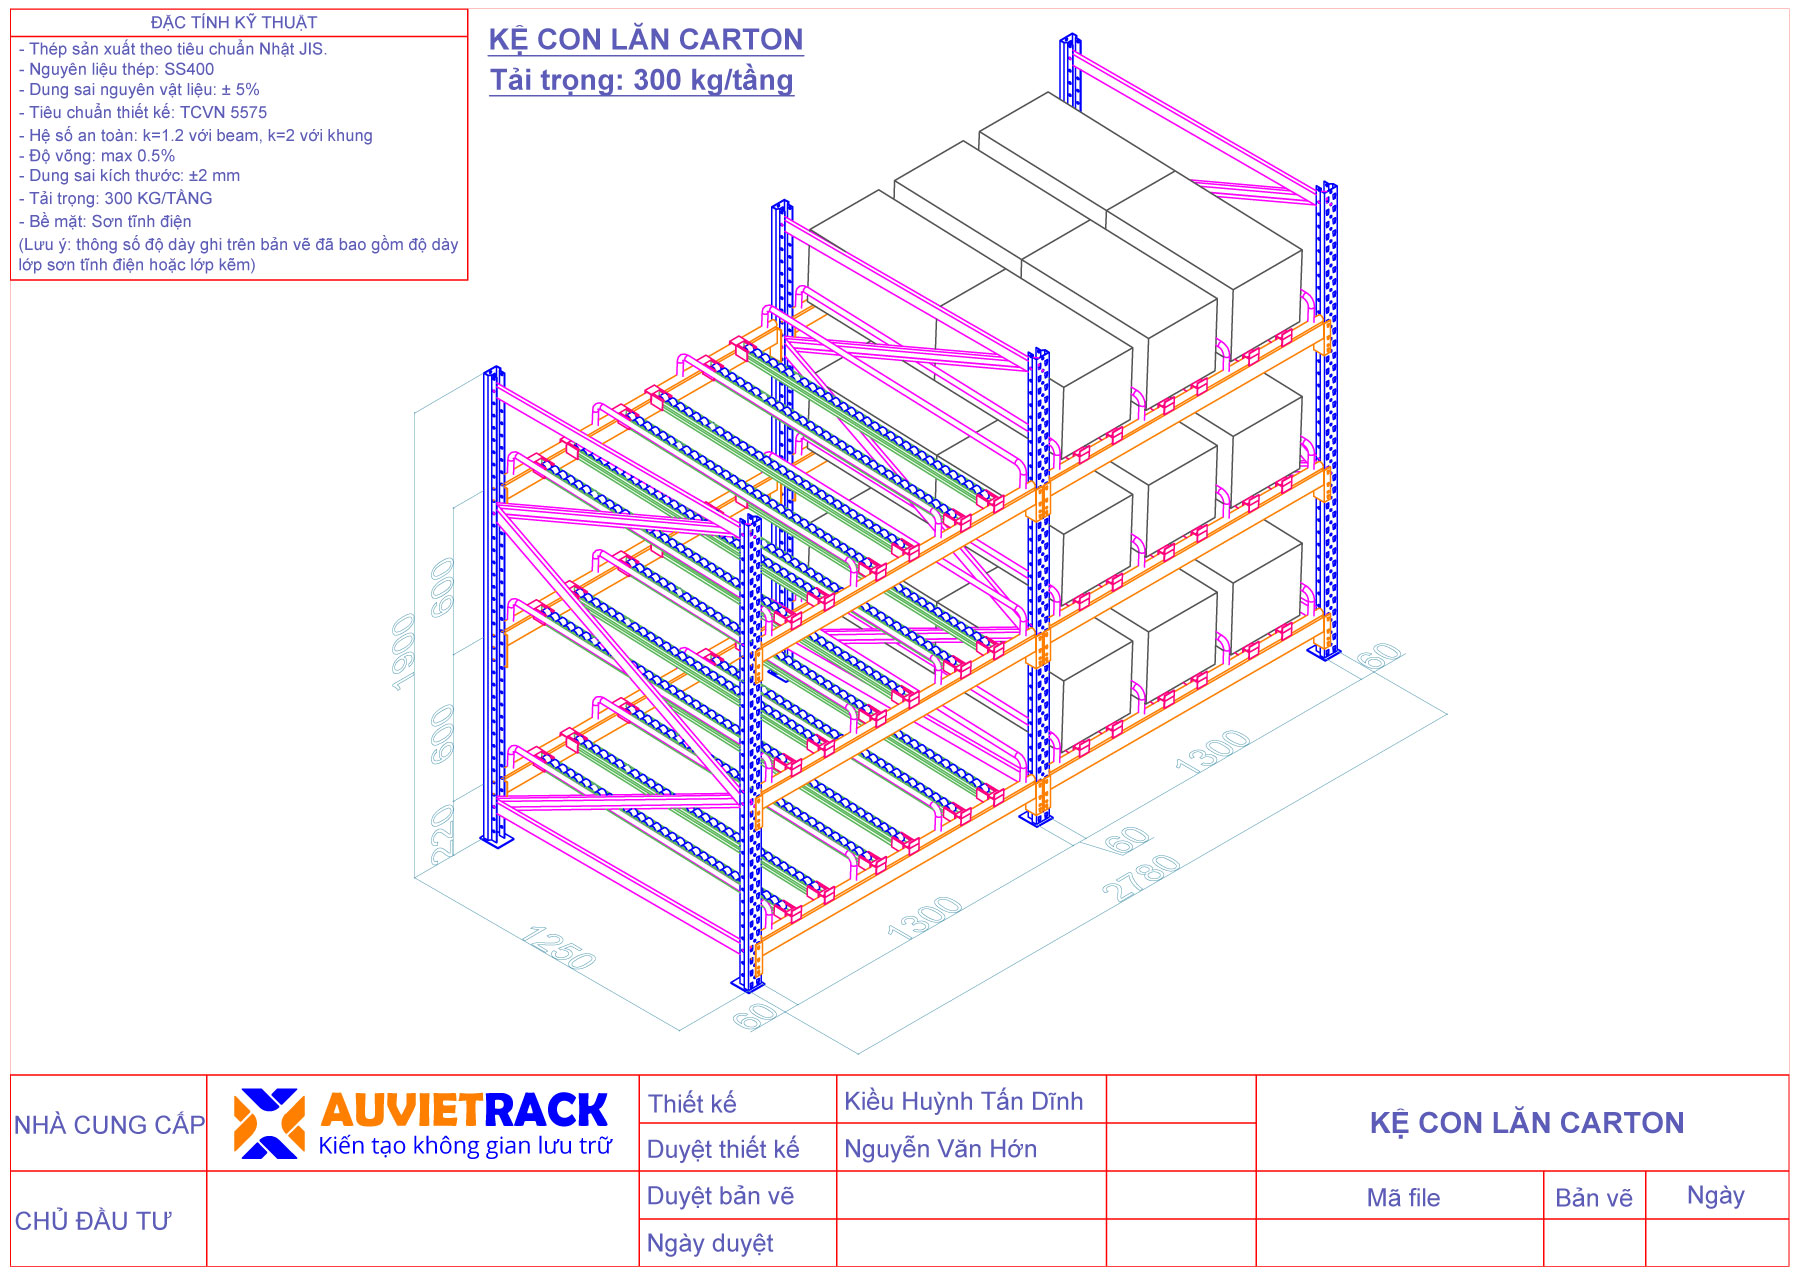 Bảng vẽ 3D kệ Con Lăn Carton - Canrto flow rack